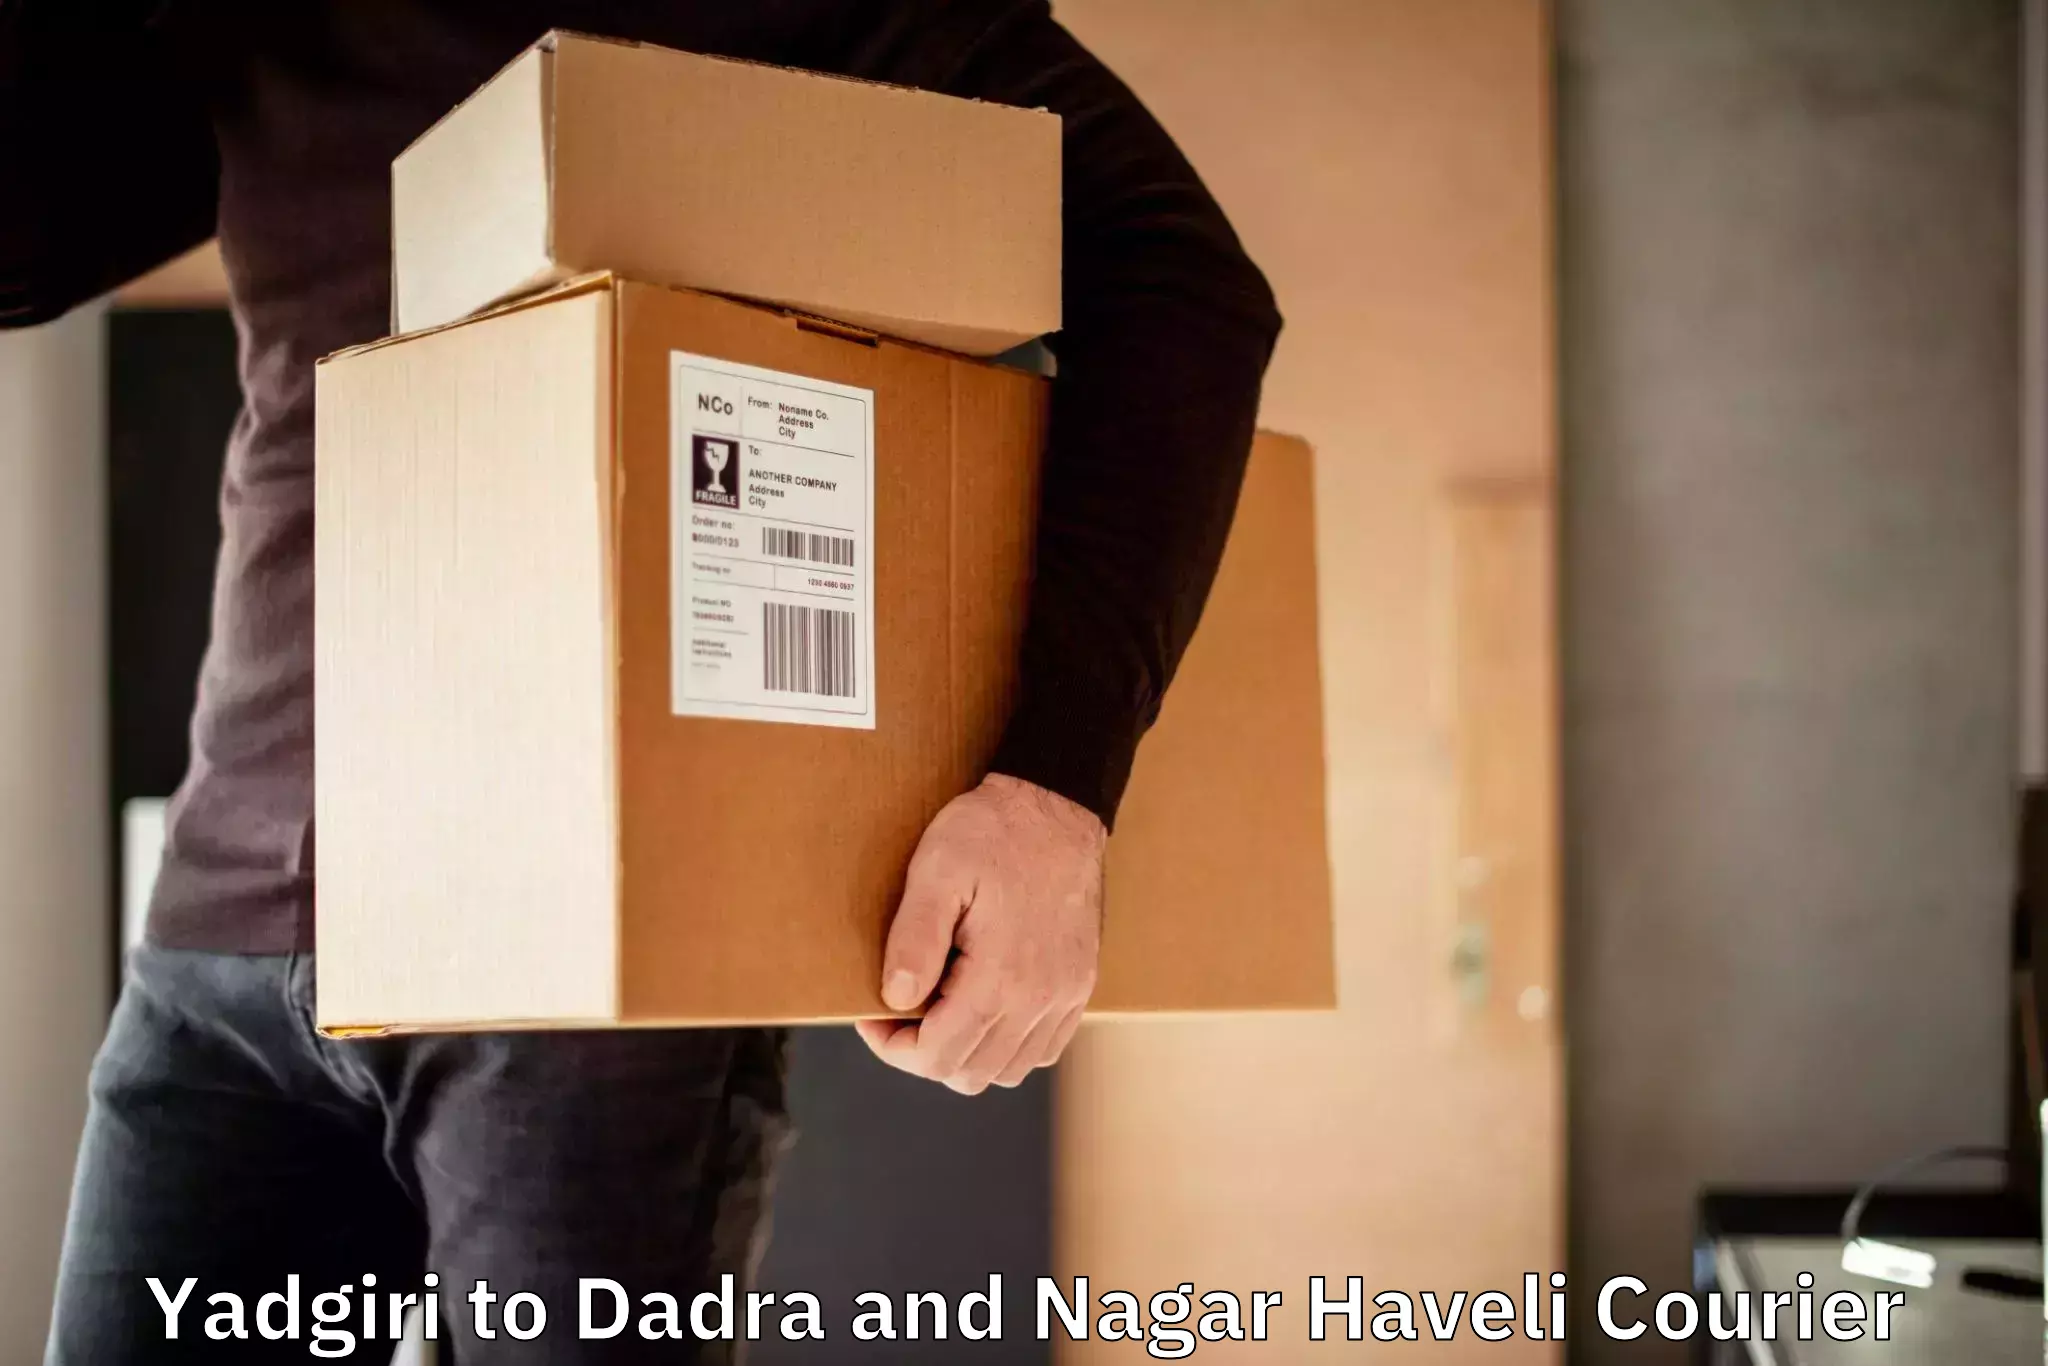 Courier service comparison Yadgiri to Dadra and Nagar Haveli